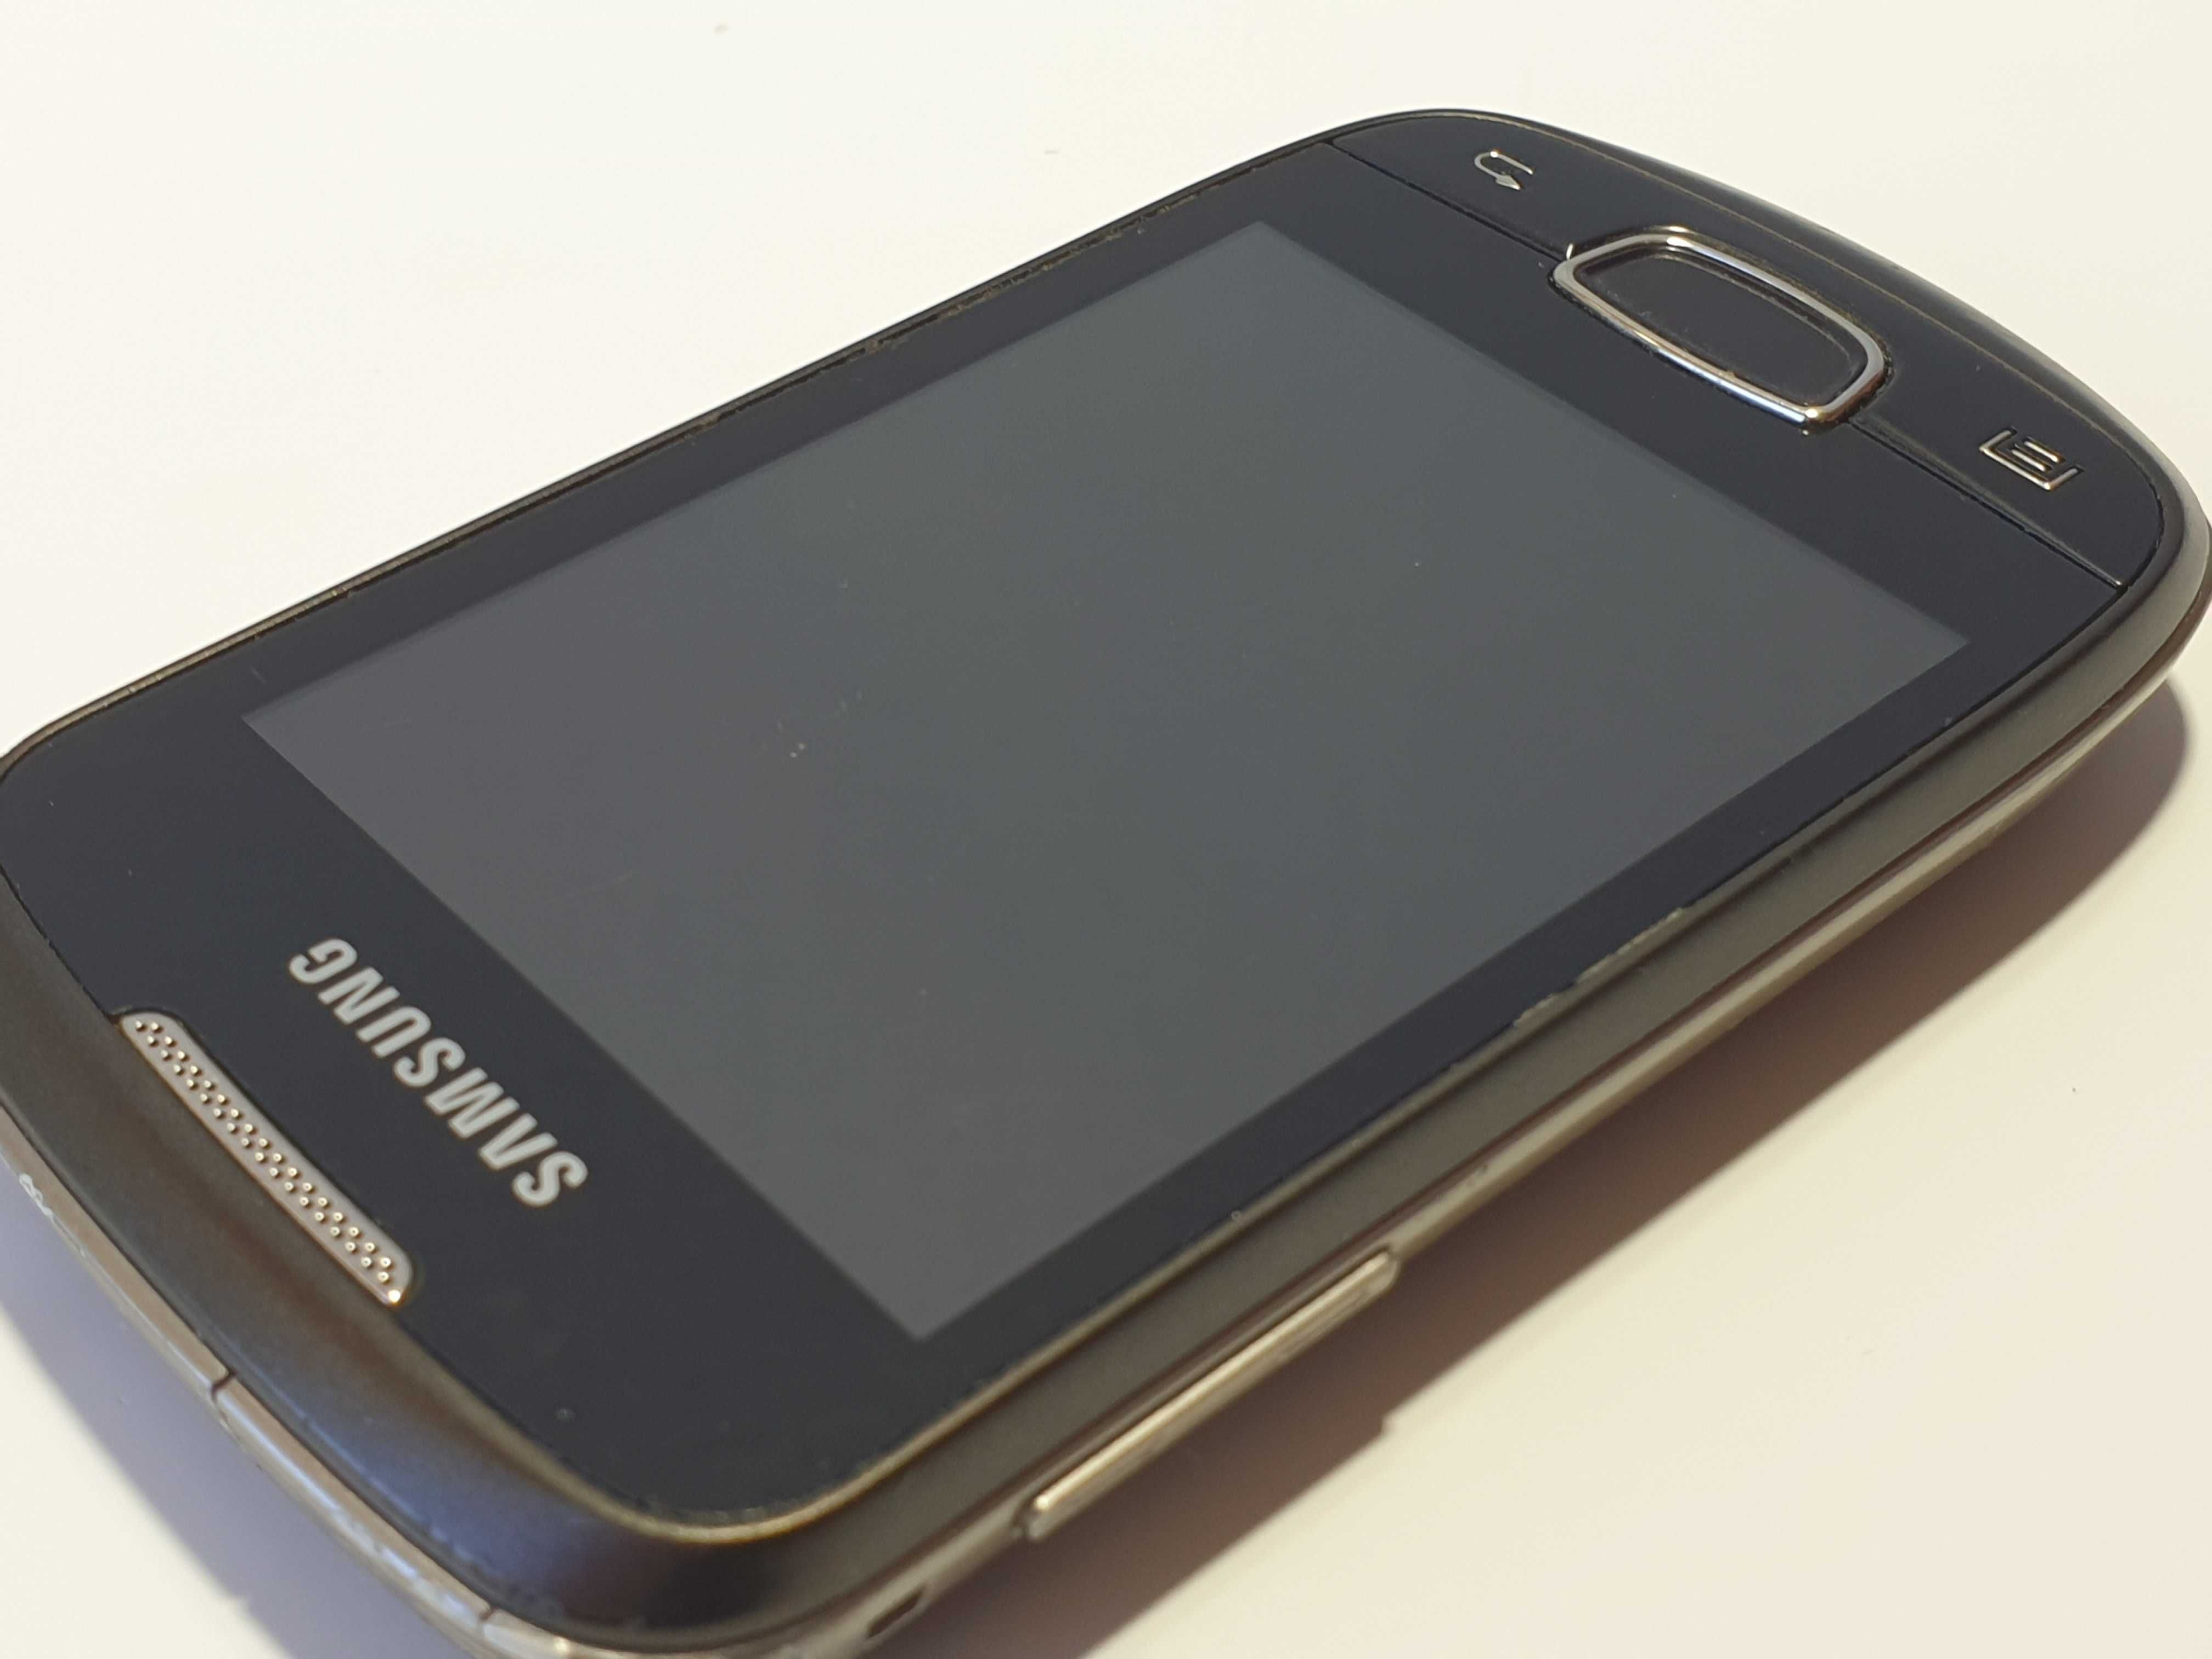 Samsung GT S5570 Galaxy Mini